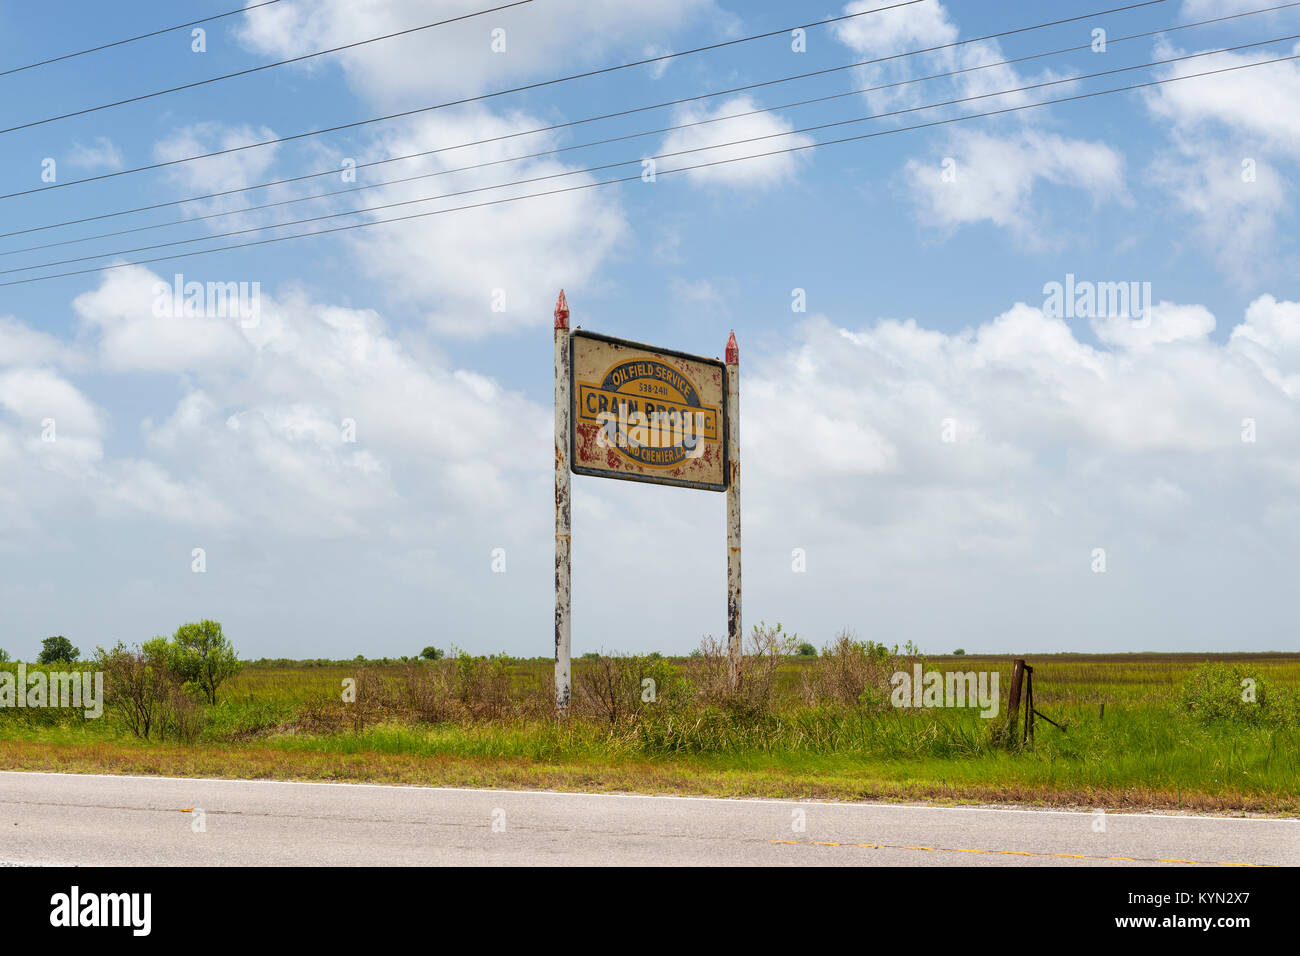 Lake Charles, Louisiana- June 15, 2014: An old and rusty billboard along a roud near Lake Charles, Louisiana, USA Stock Photo